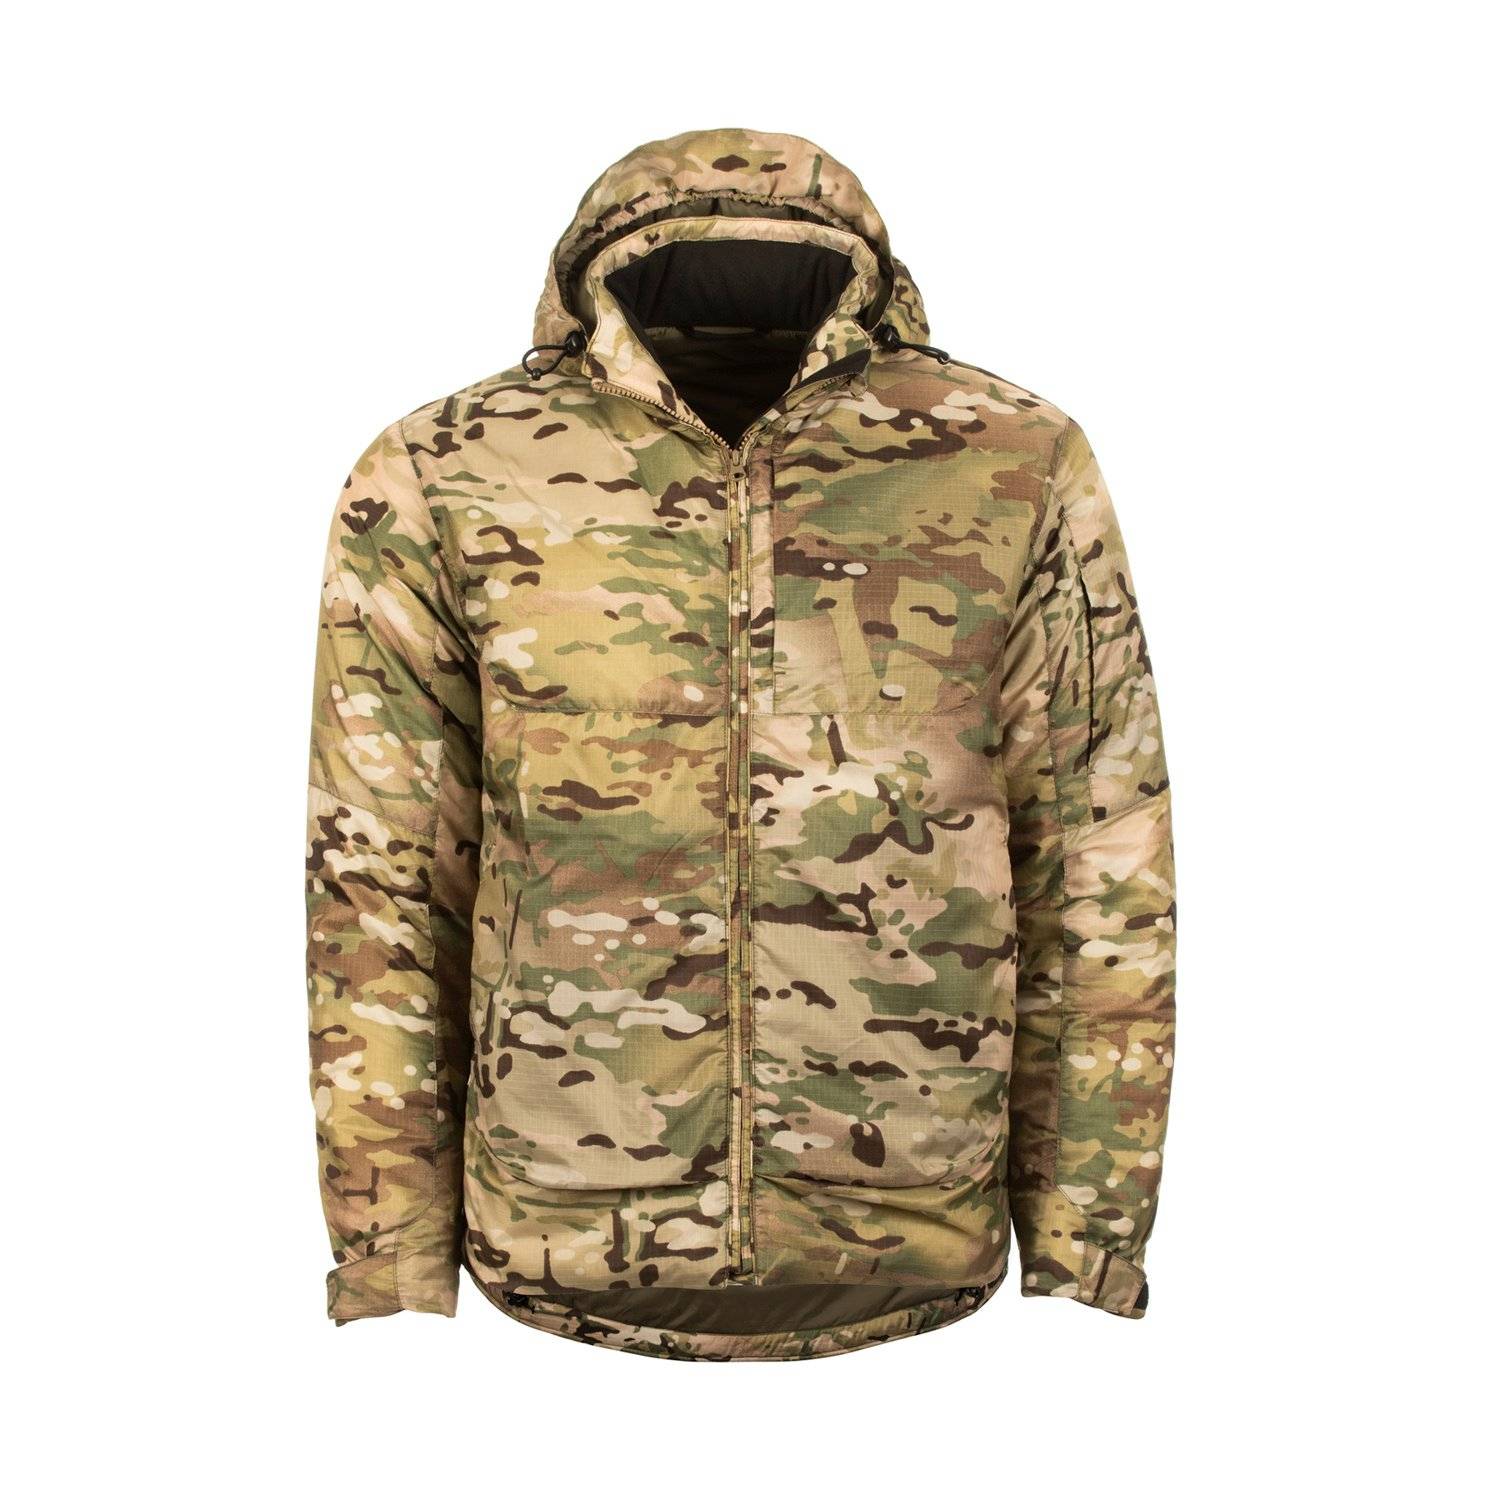 Snugpak Men's Arrowhead Insulated Jacket | Military Jackets